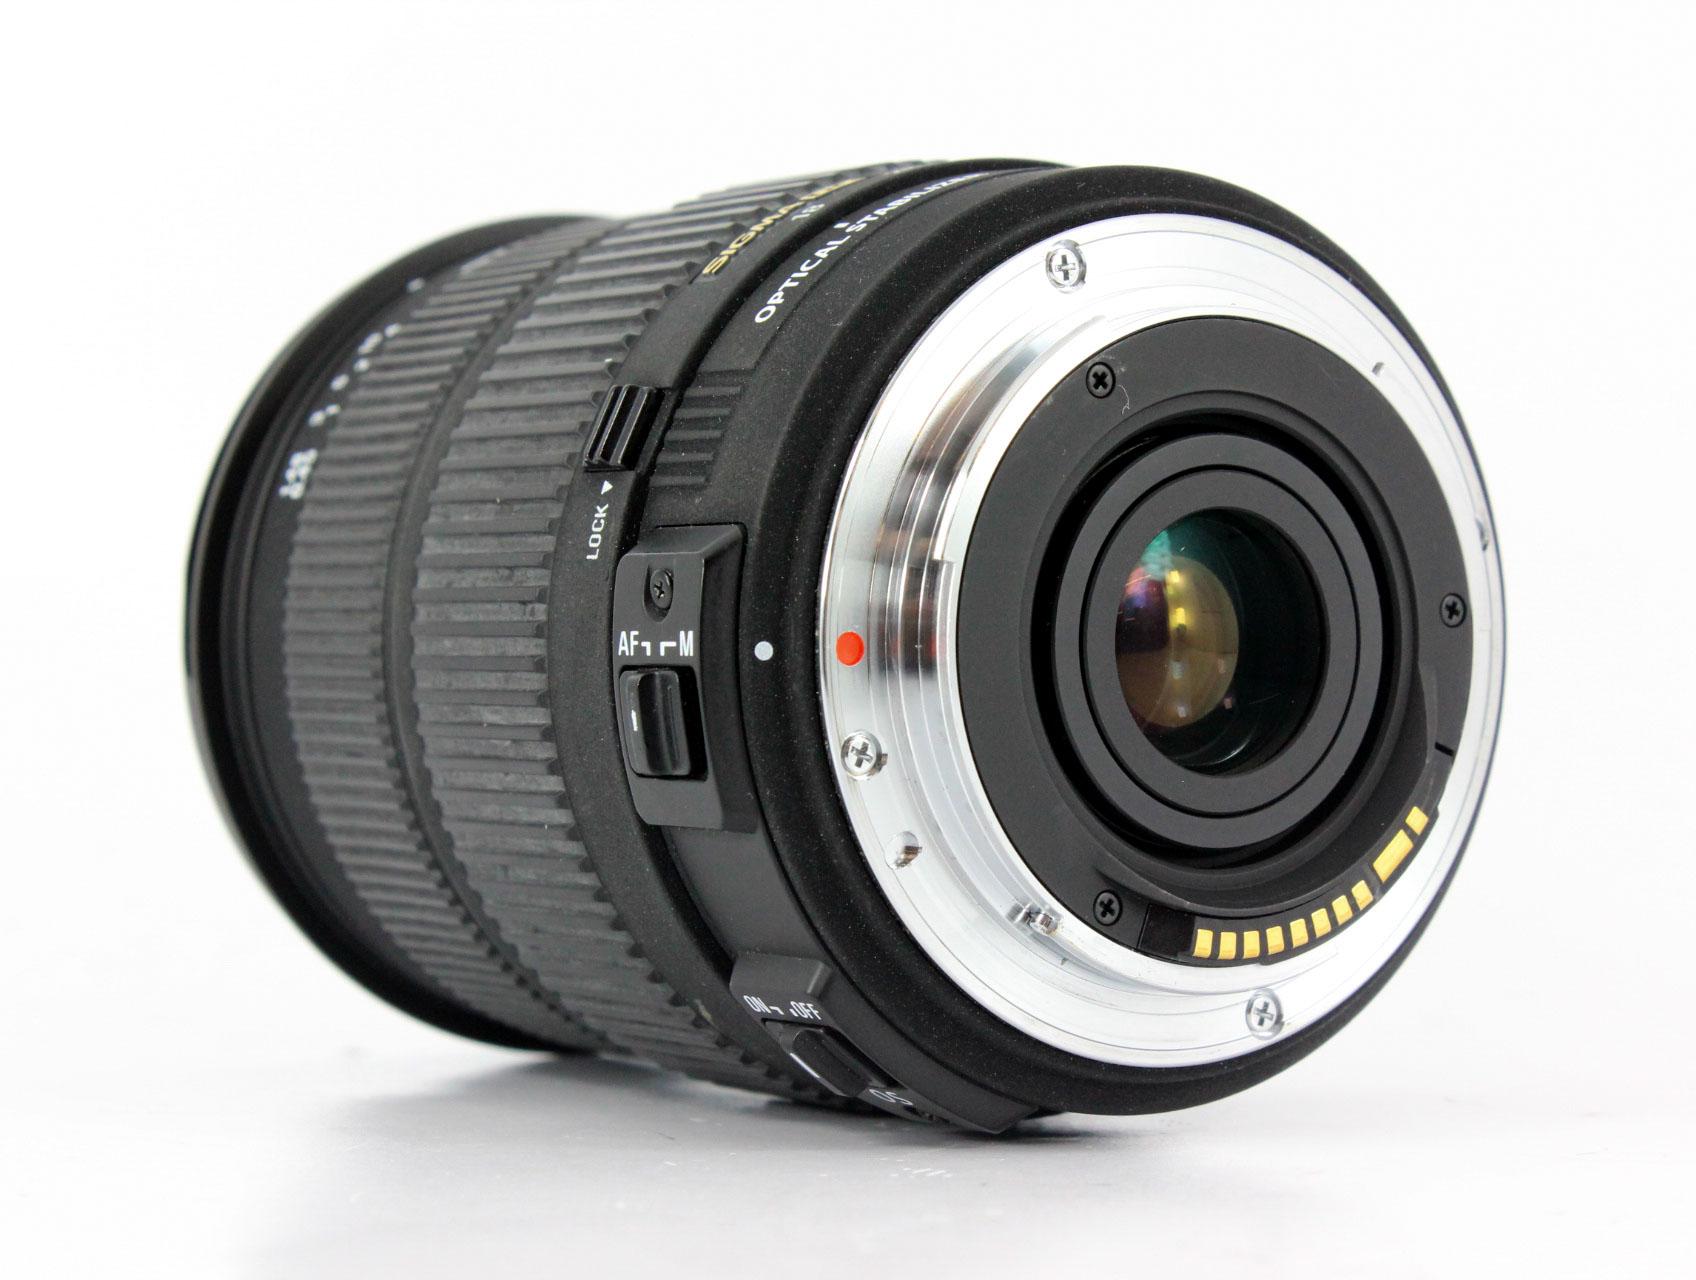 Sigma 18 200mm. Sigma 18-200mm f3.5-6.3 DC os. Sigma af 18-250mm f/3.5-6.3 DC os HSM Minolta a. Sigma 18-200mm 1:3.5-6.3 вс os HSM Nikon.